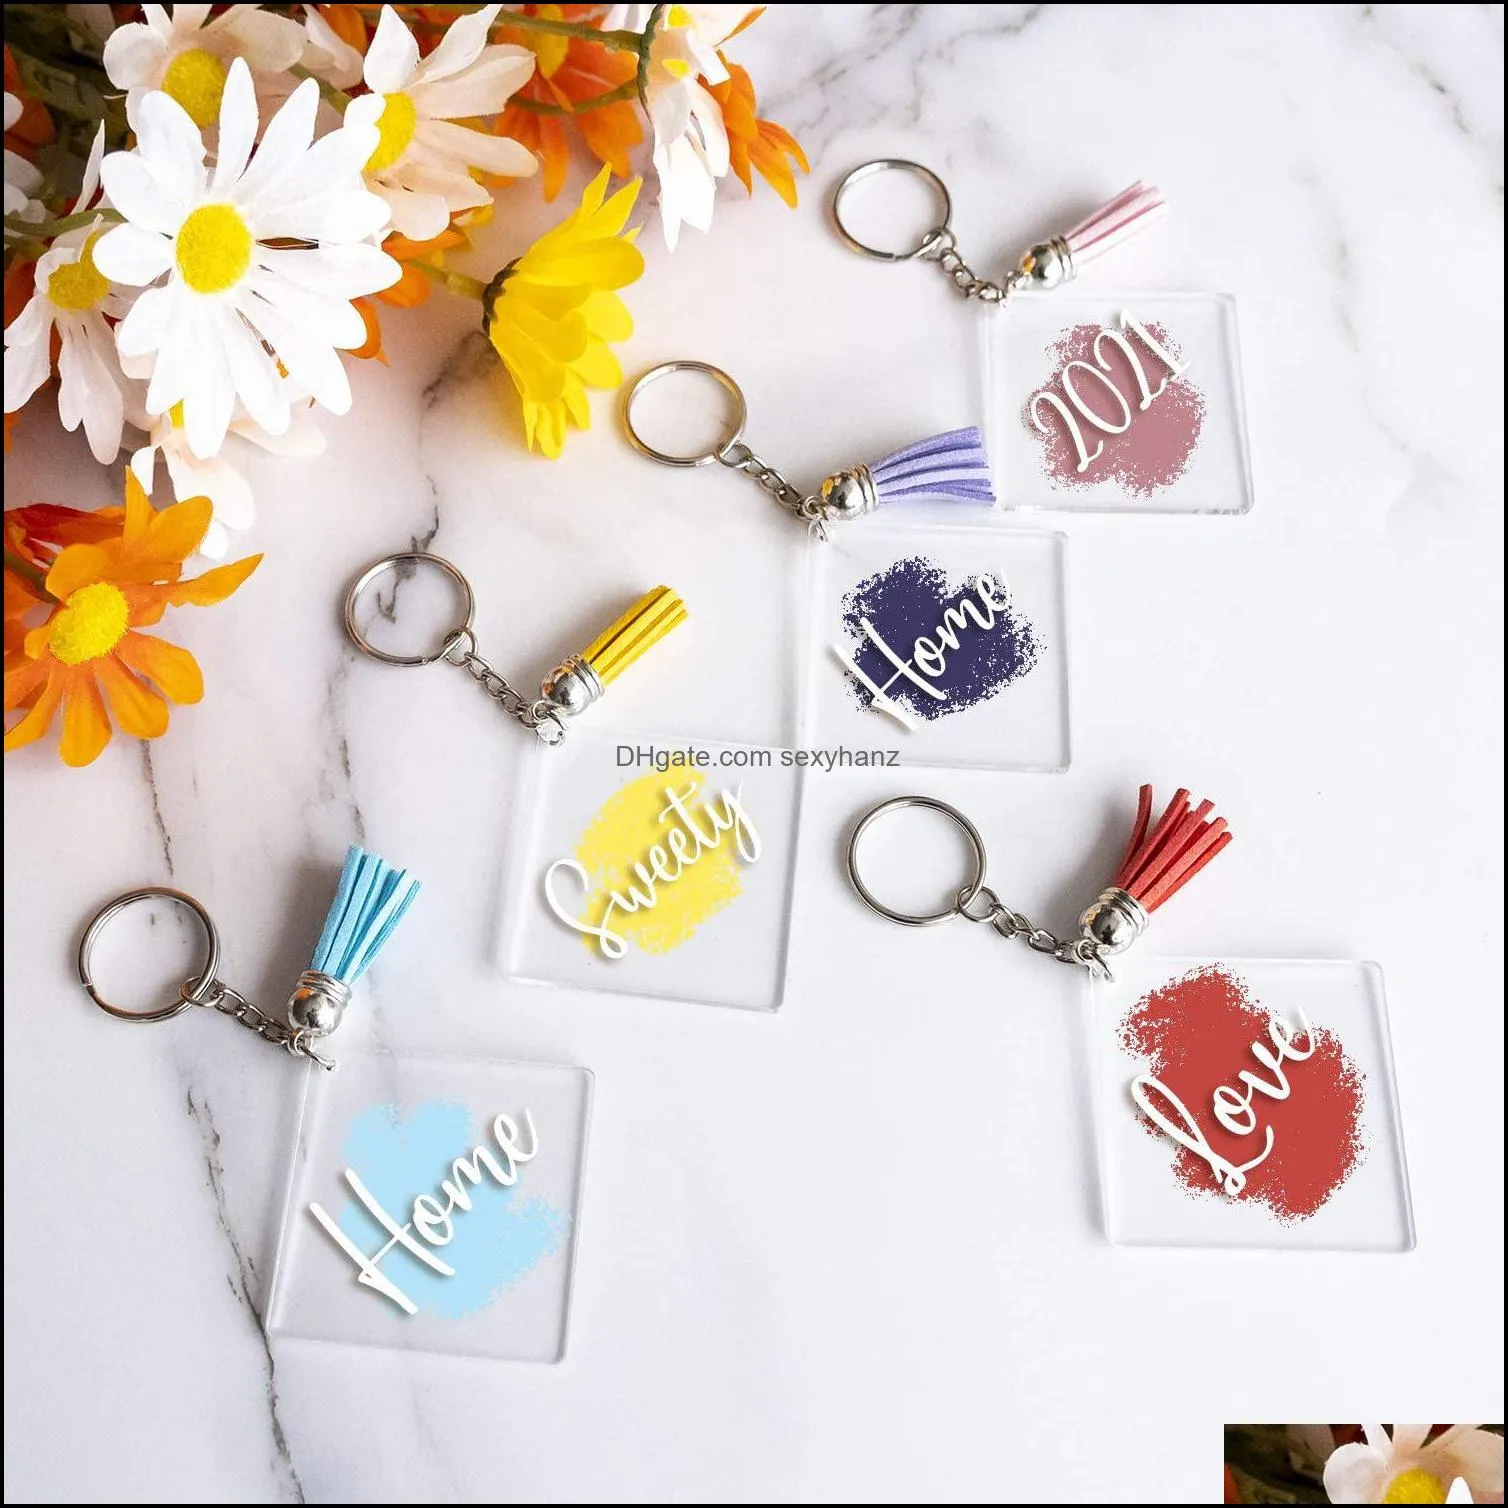 120 pcs square acrylic keychain blanks tassels set women bag pendant car key rings with chain diy crafts making kit w41f